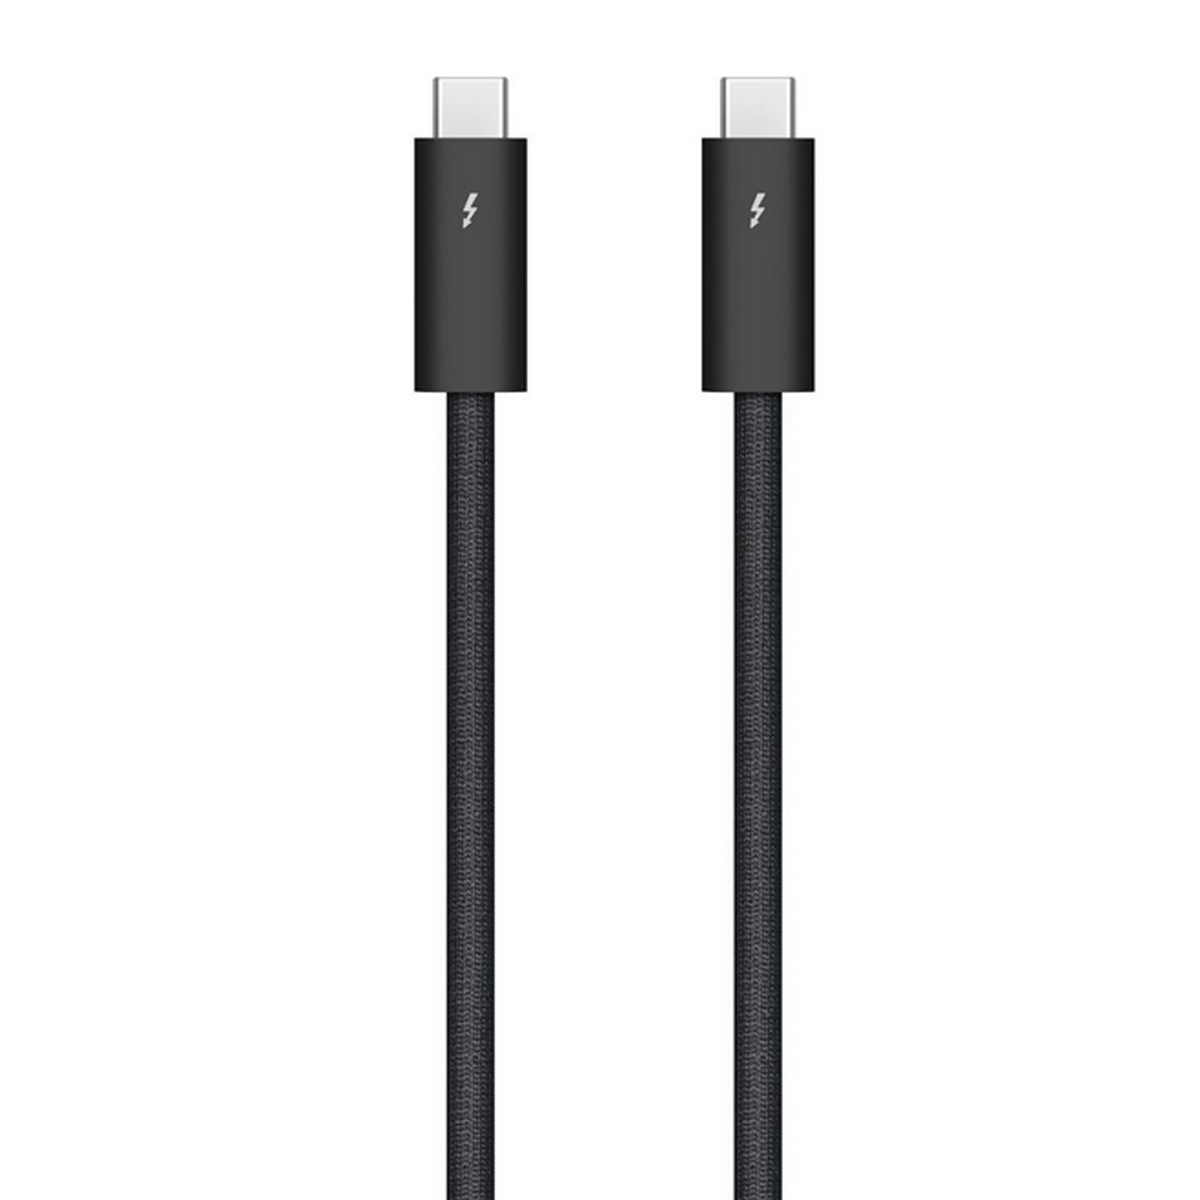 Apple Thunderbolt 4 Pro Cable, 1.8 m, Black, MN713